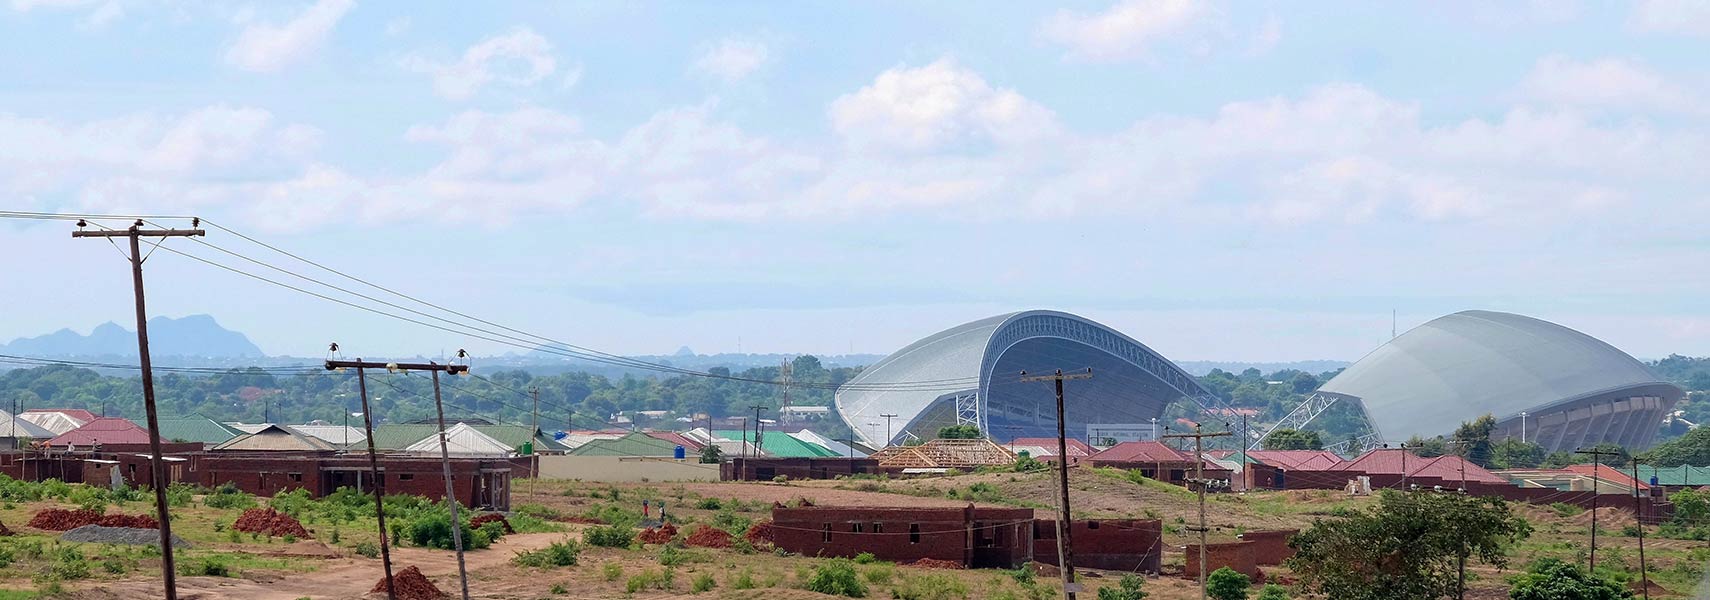 Lilongwe's new stadium